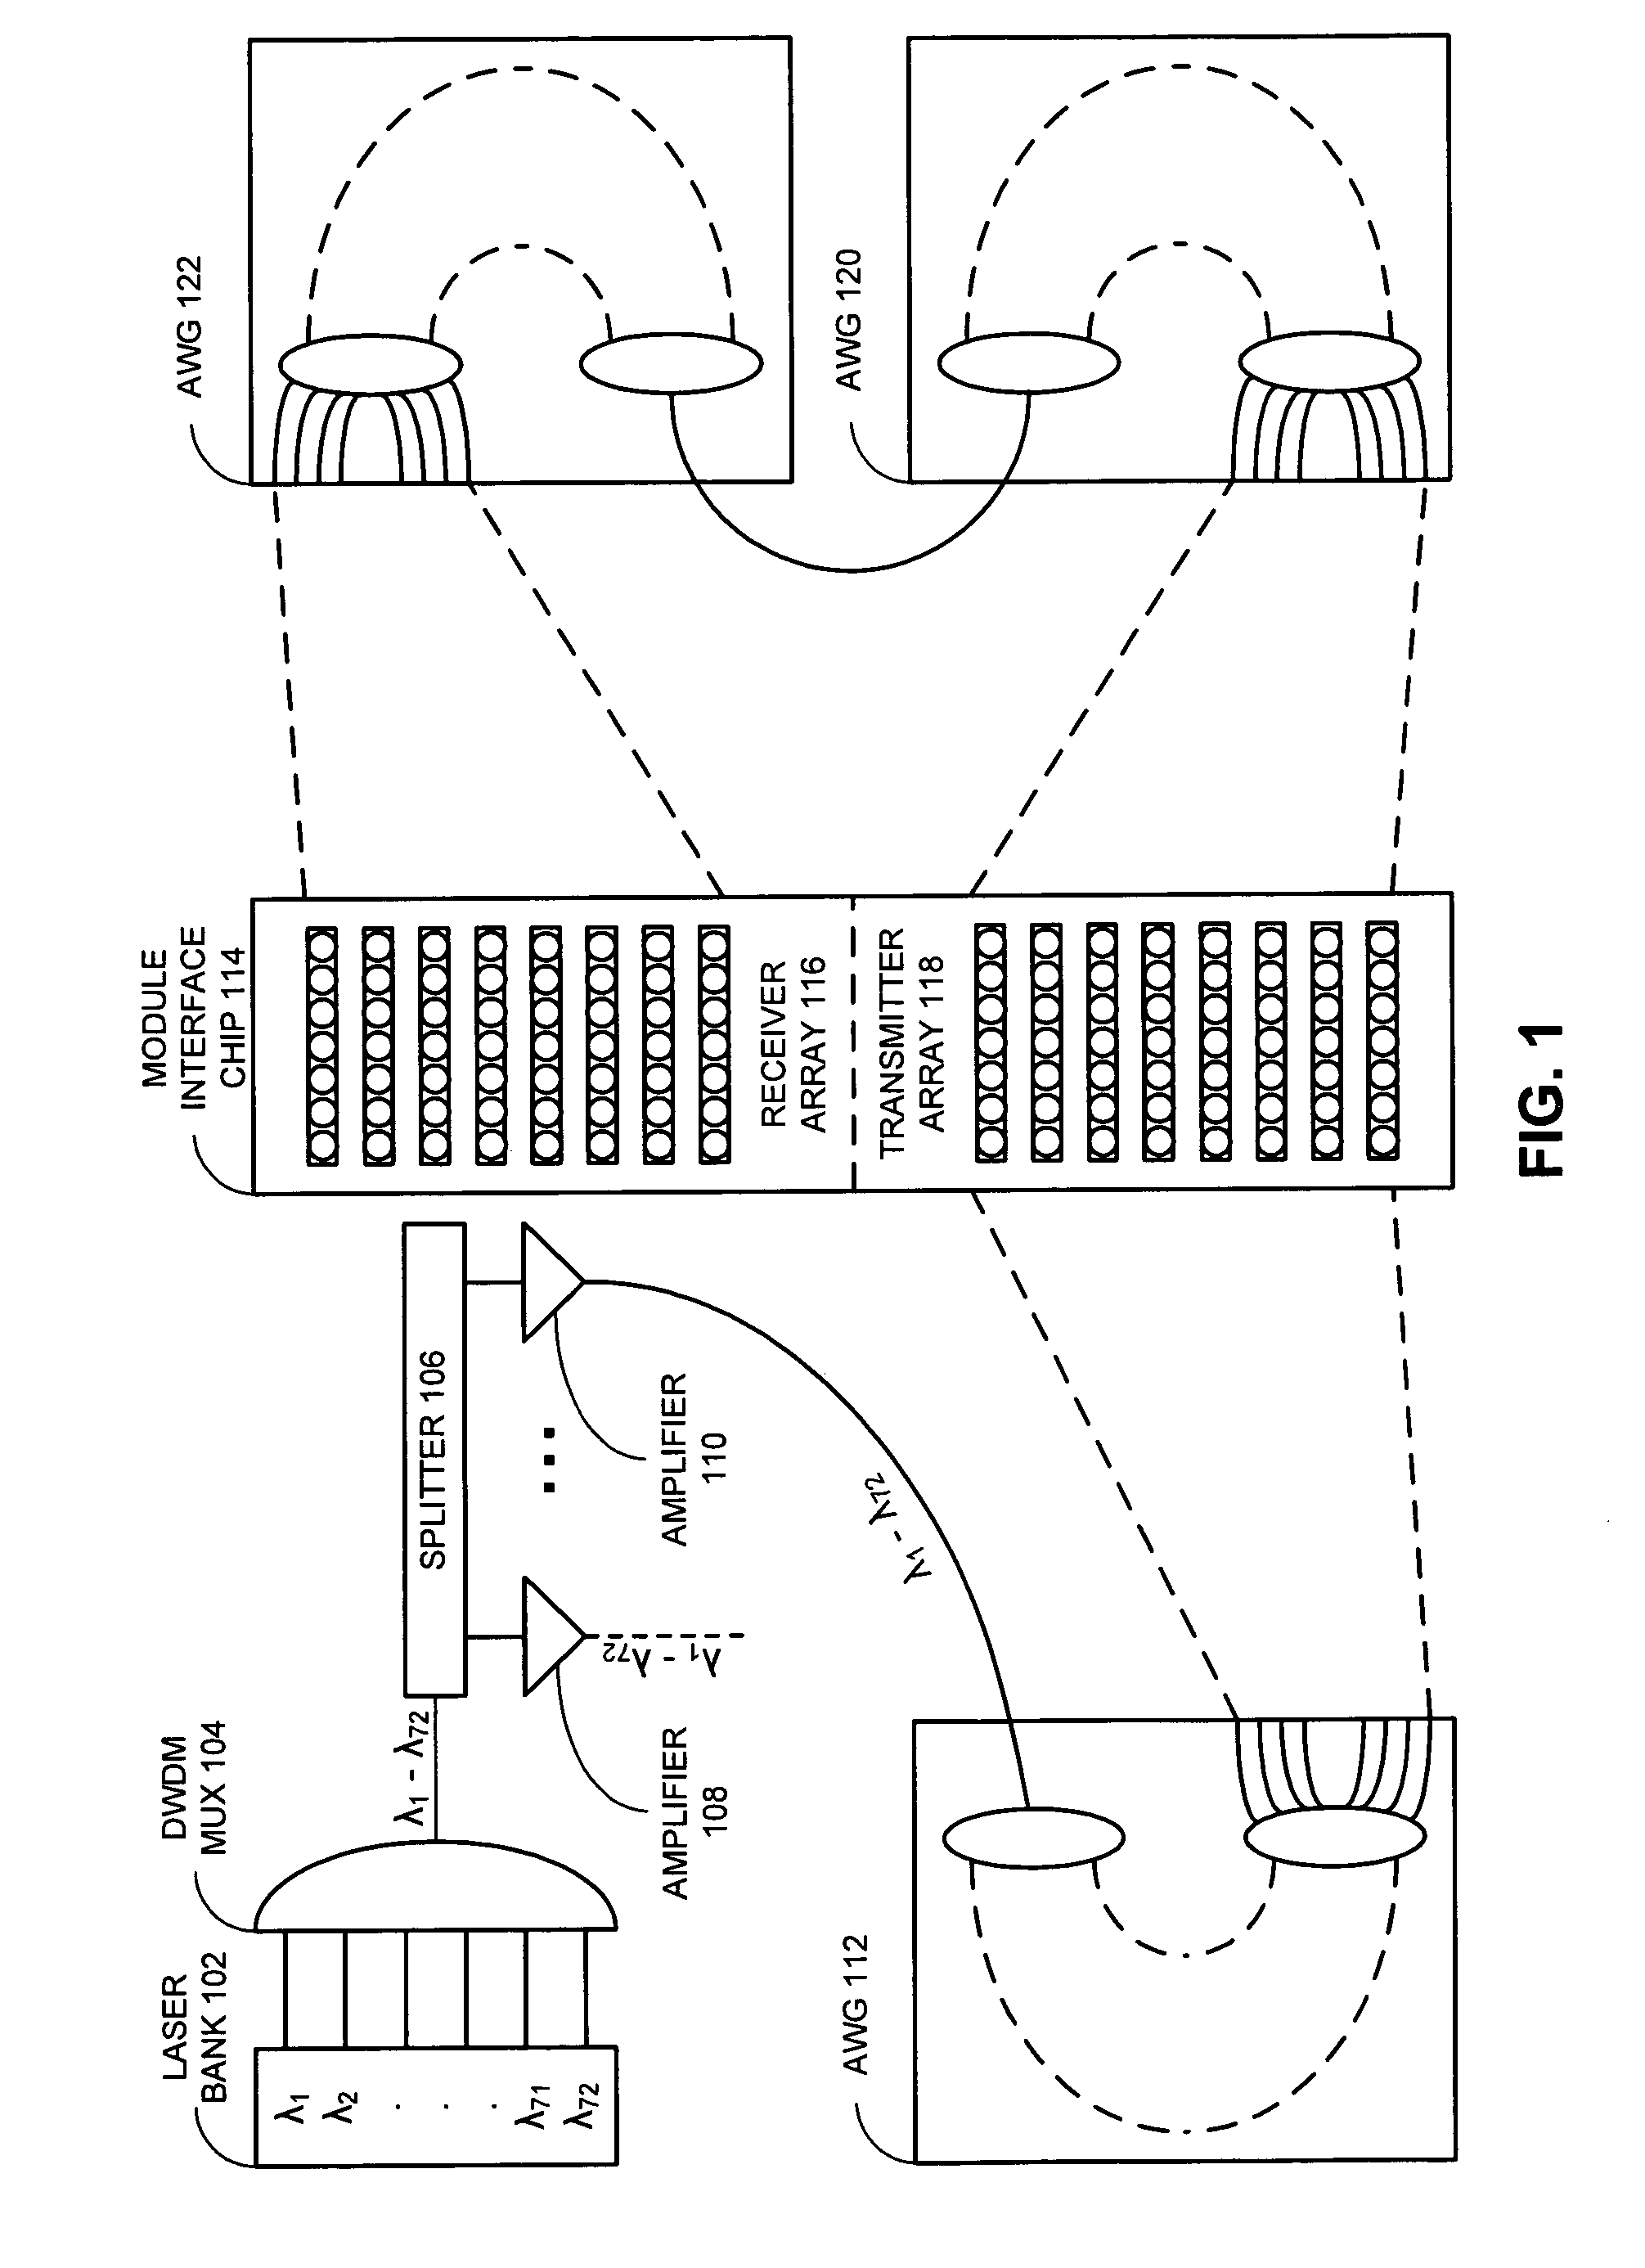 Integrated ring modulator array WDM transceiver